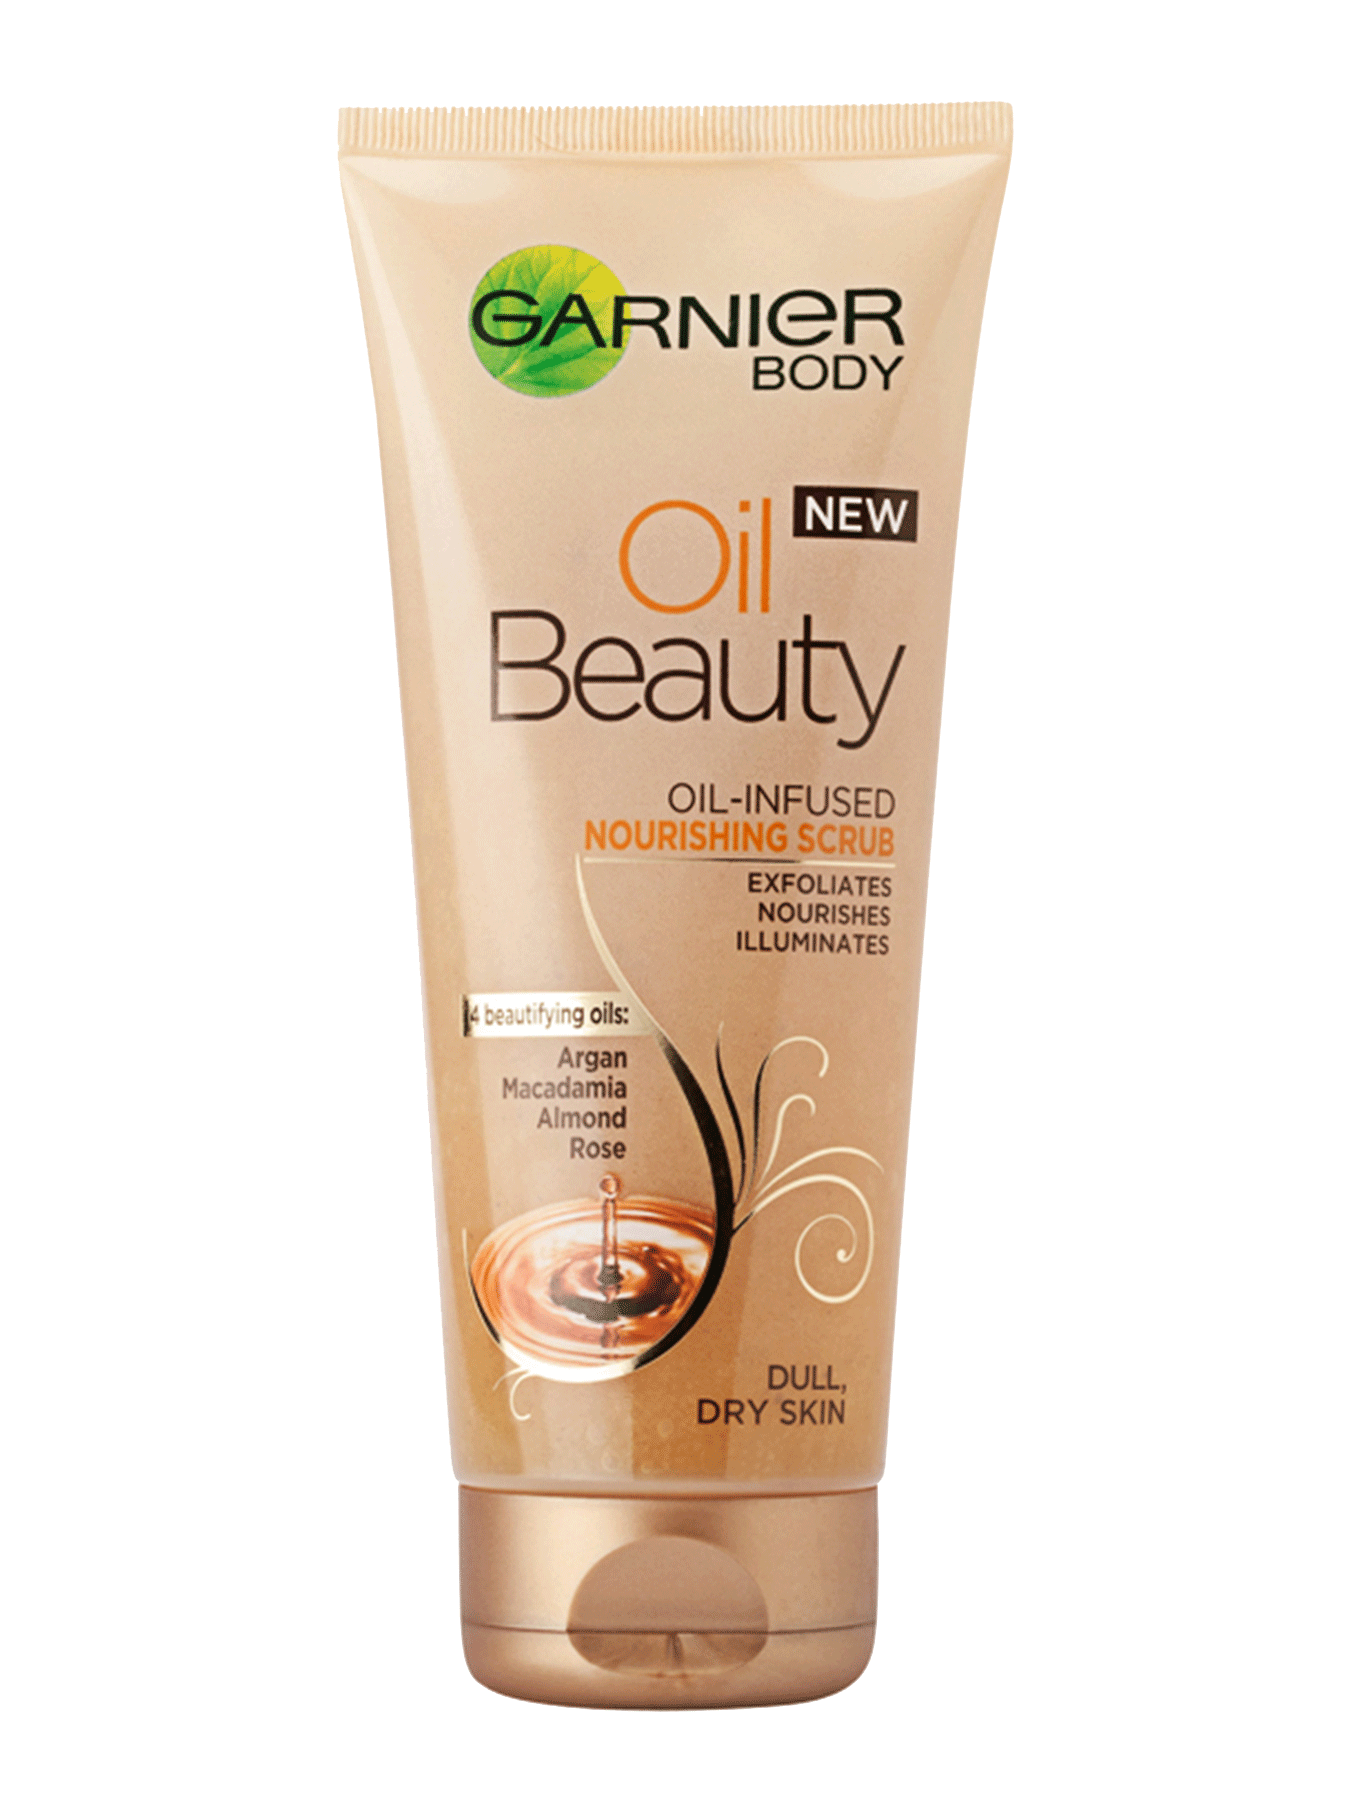 Garnier Body Oil Beauty Nourishing Scrub